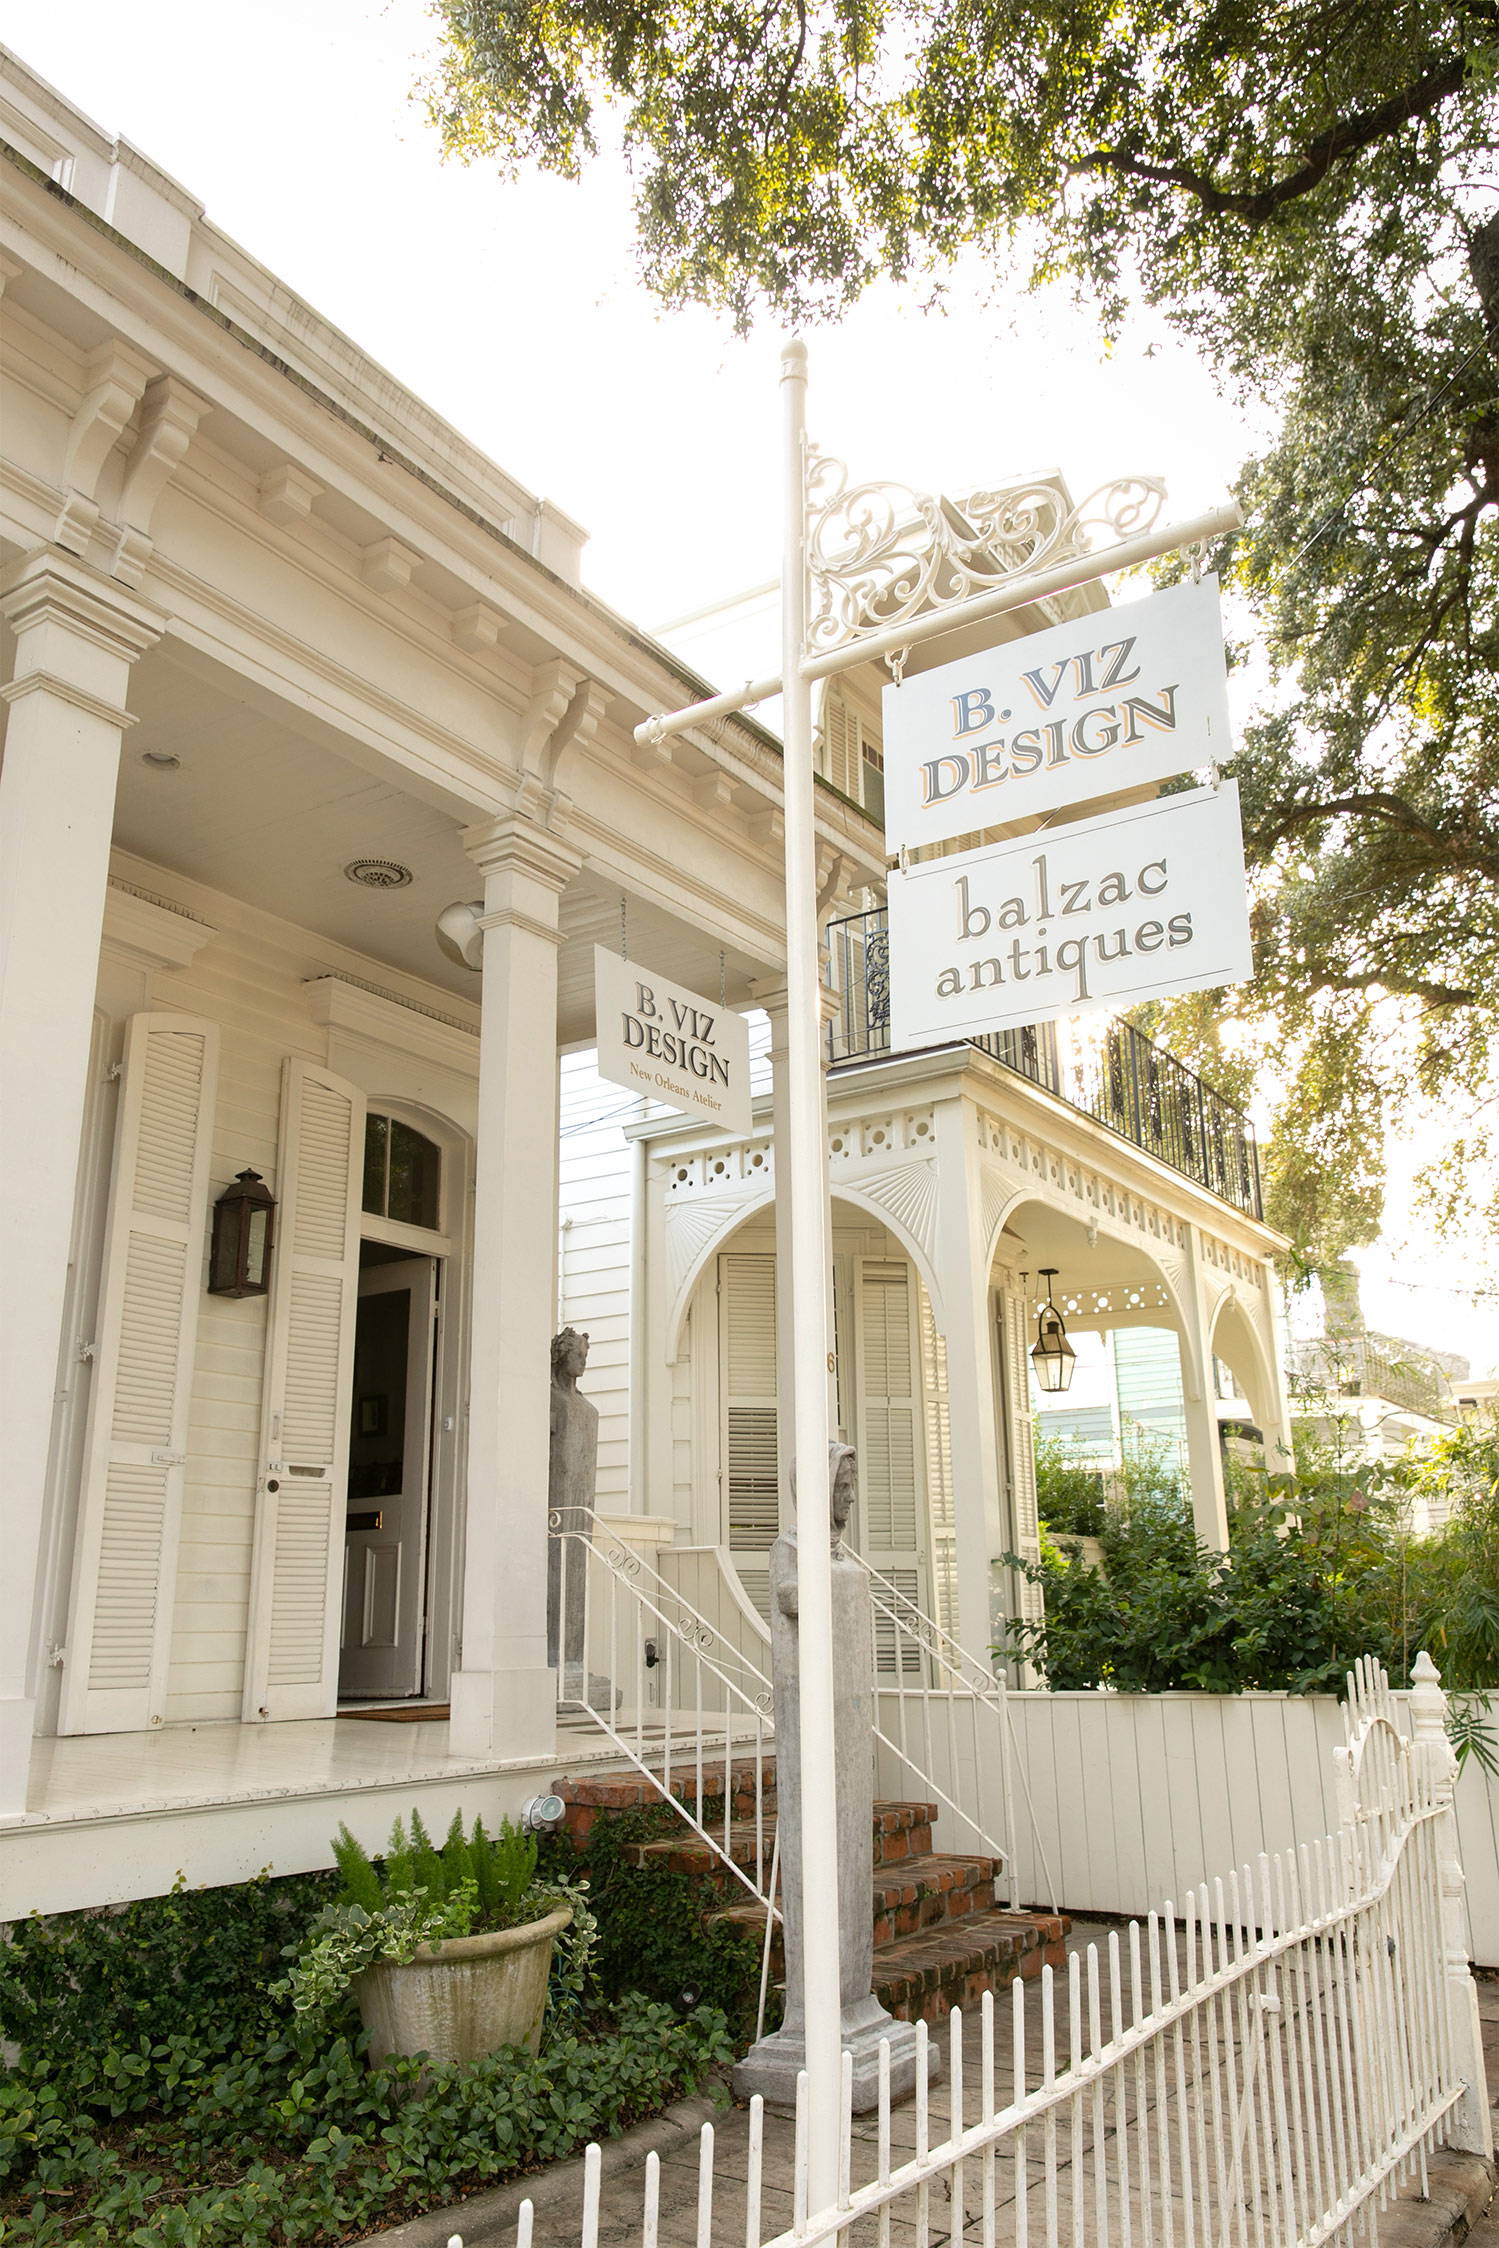 Exterior of B. Viz Design NOLA Atelier and Balzac Antiques on on beautiful Magazine Street in New Orleans, LA. 